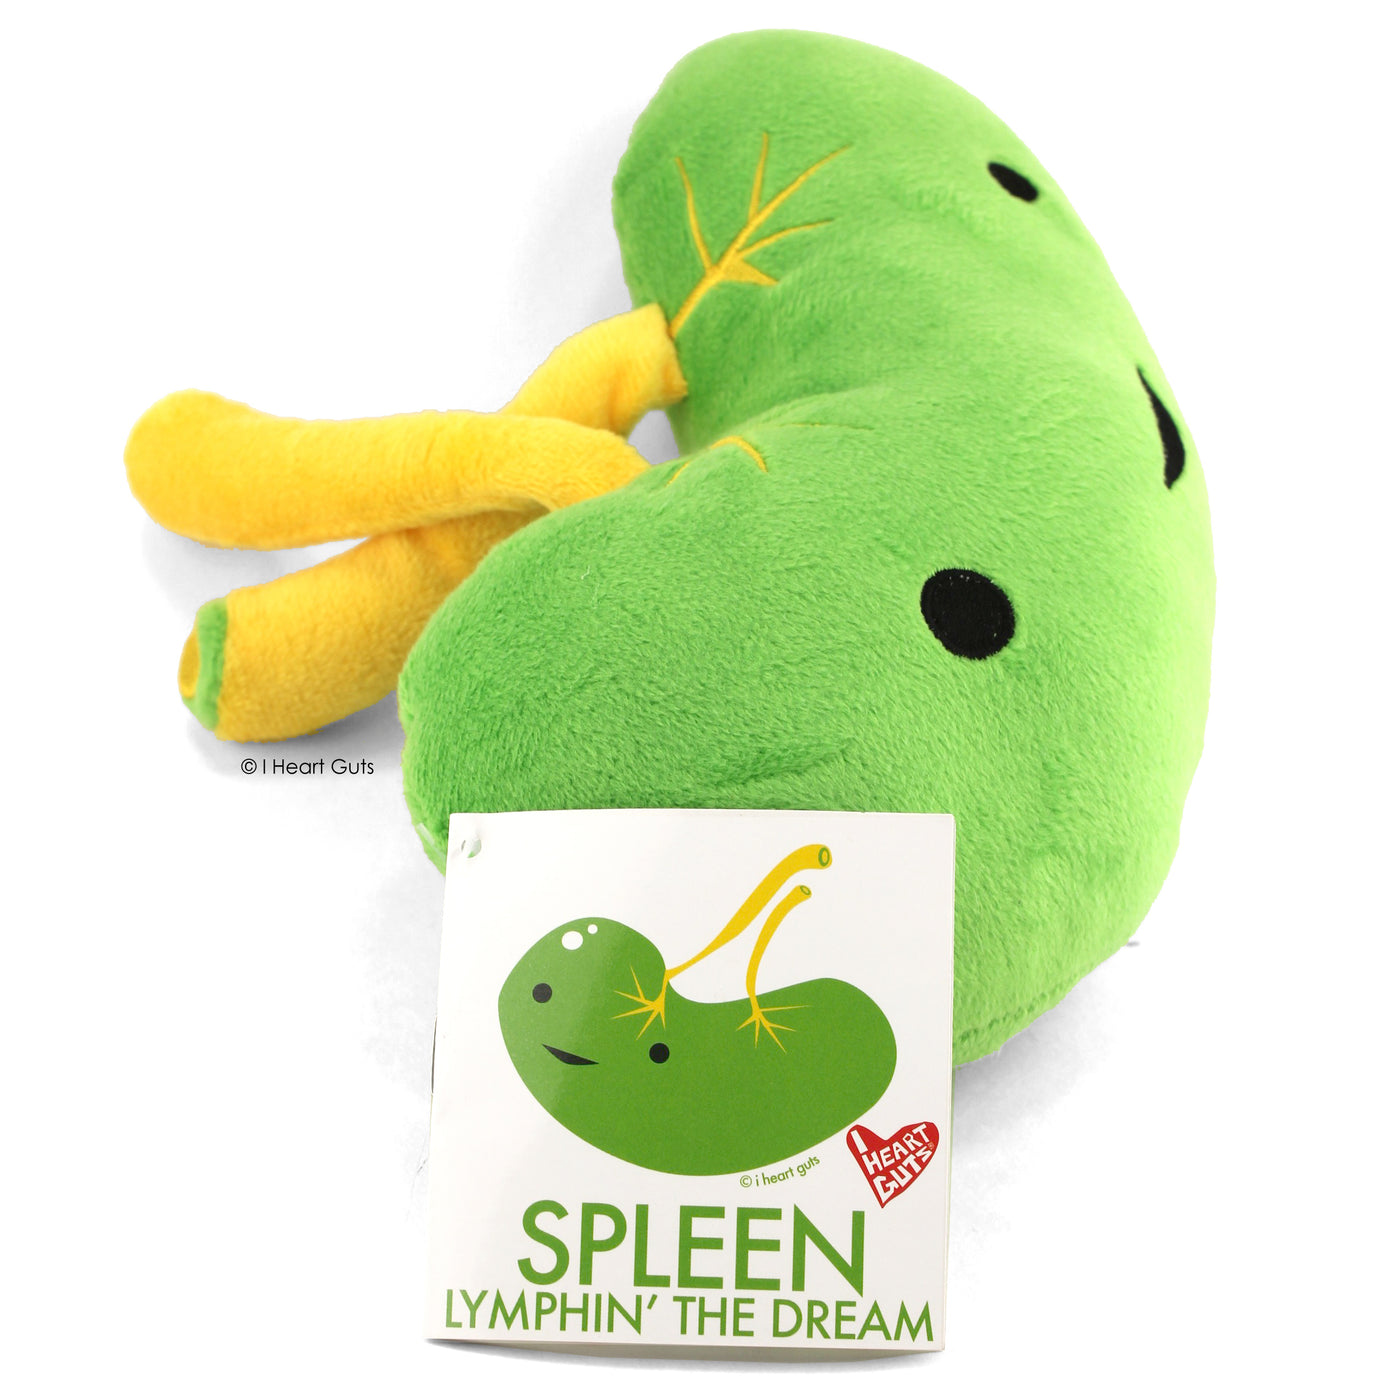 Spleen Plush - Lymphin' The Dream - Plush Organ Stuffed Toy Pillow - I Heart Guts